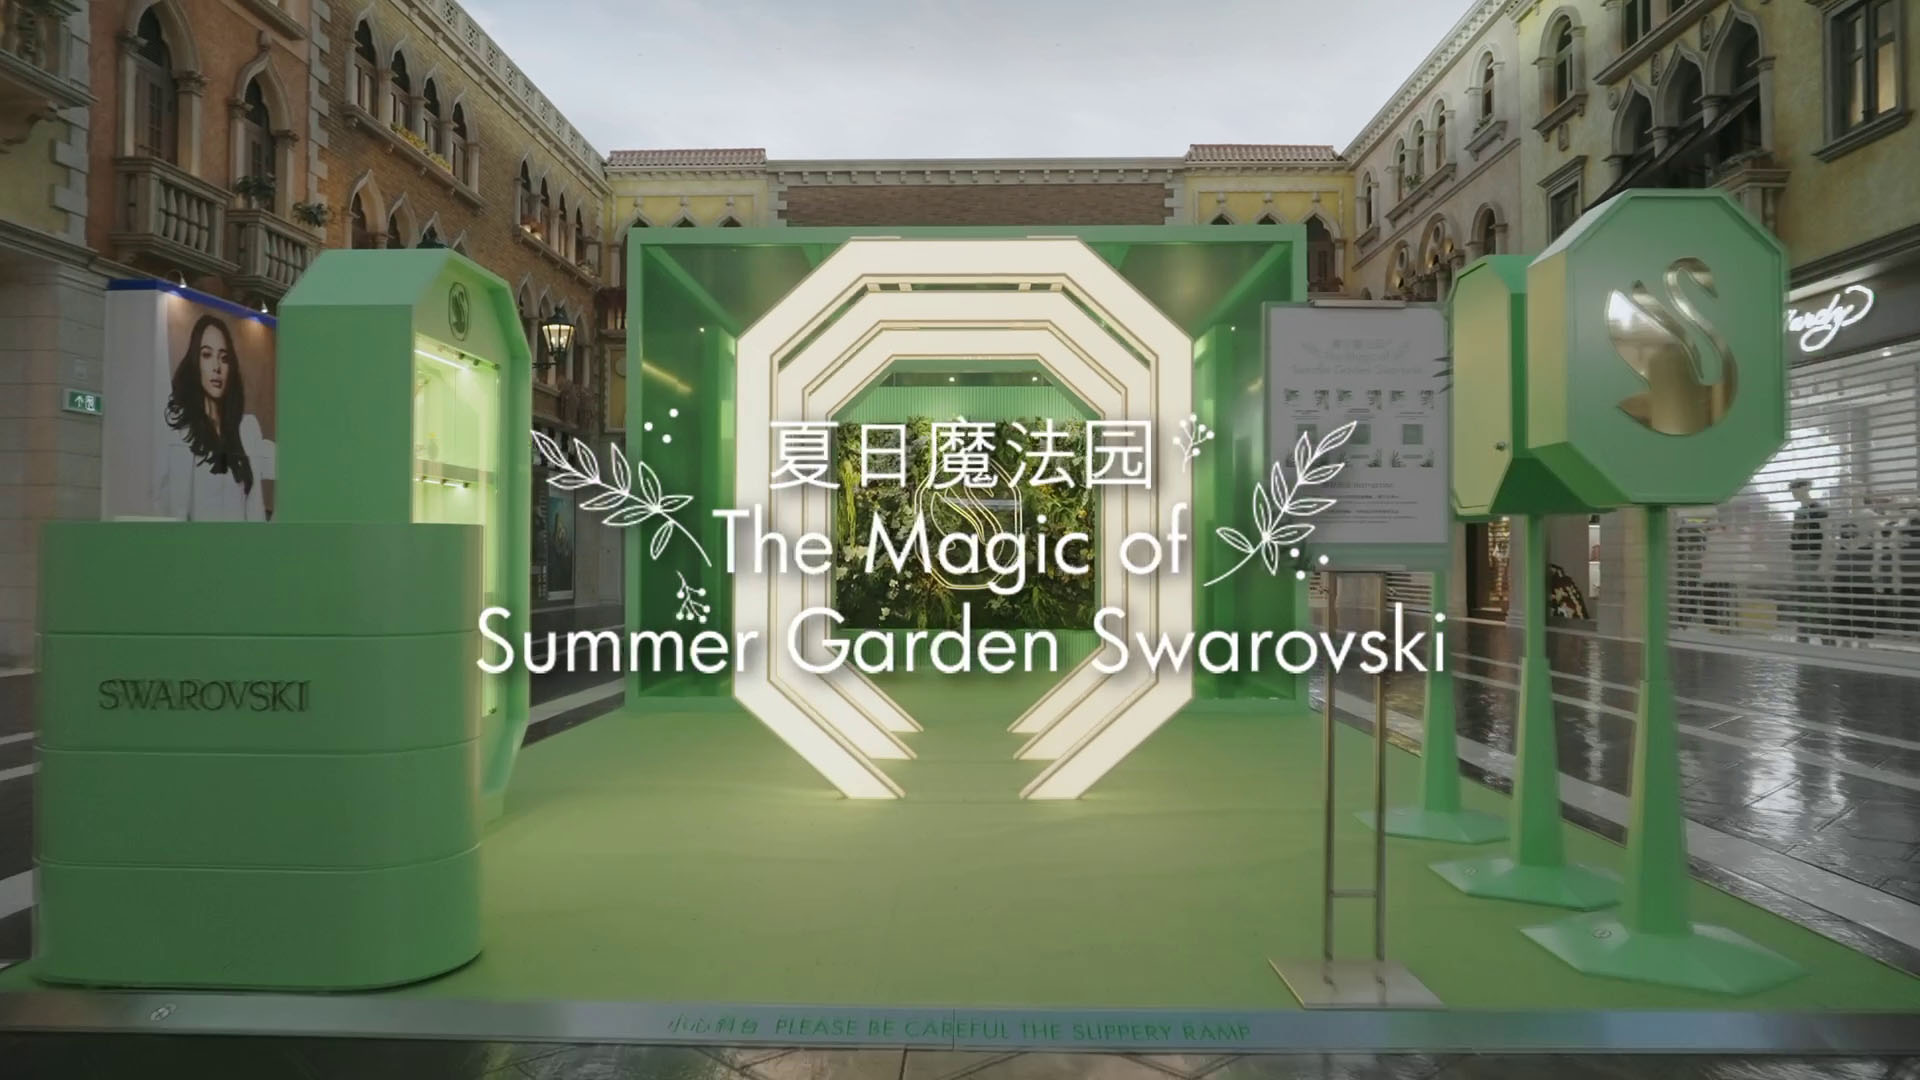 The Magic of Summer Garden Swarovski